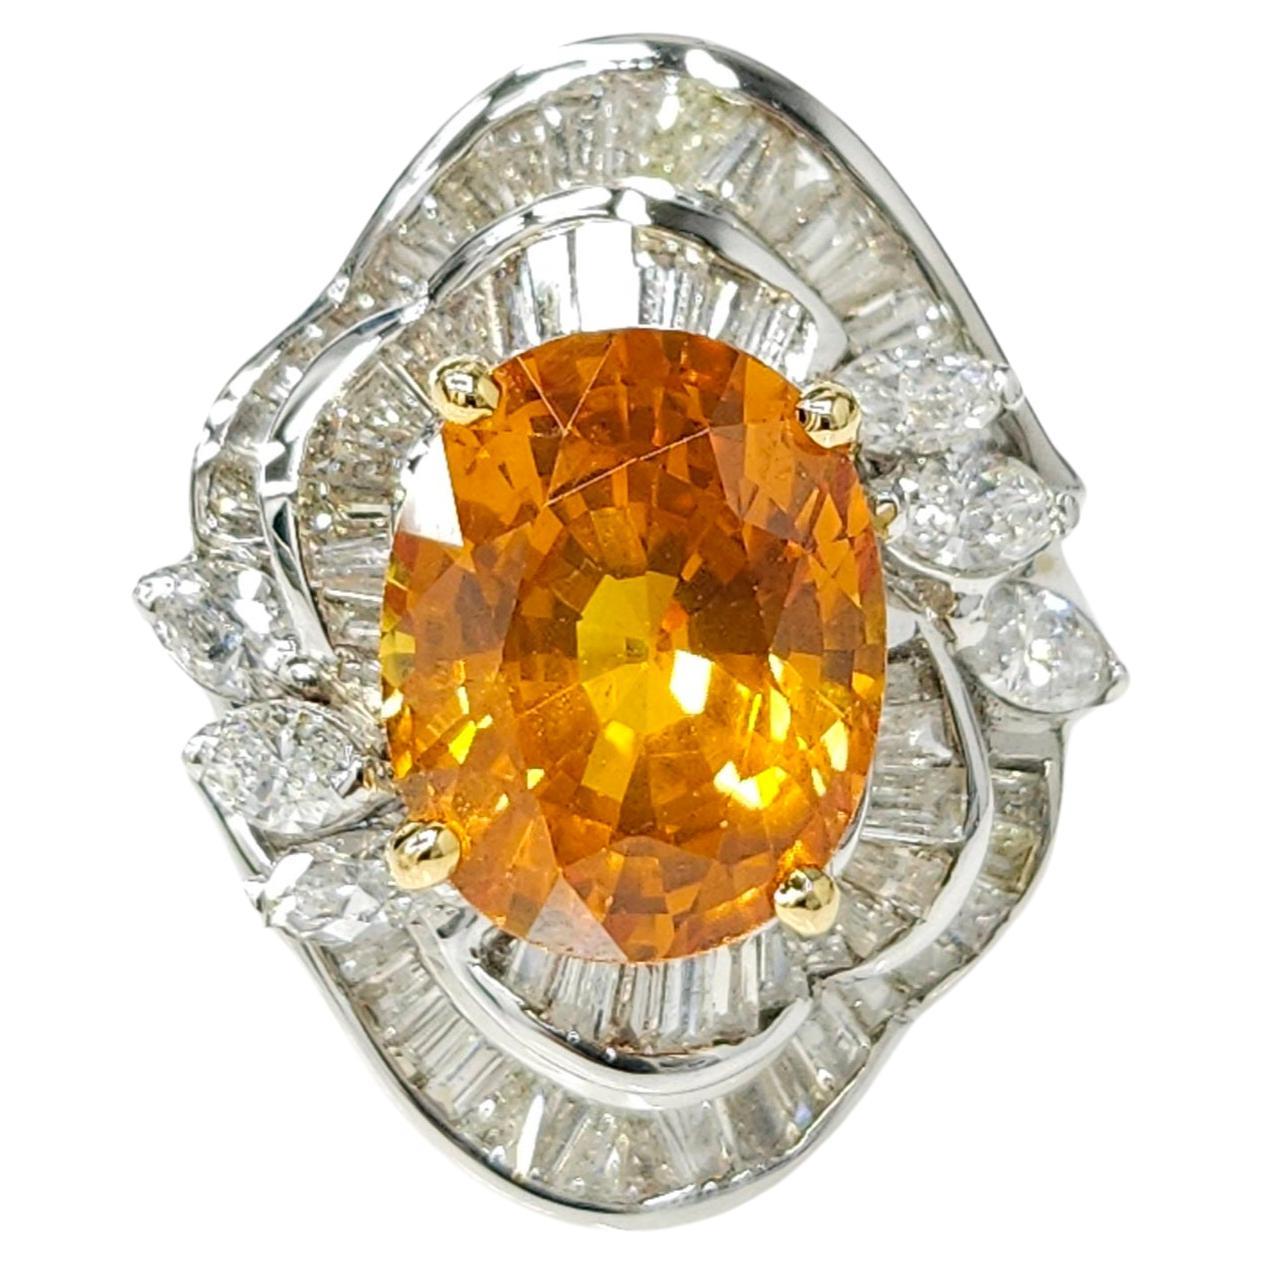 IGI Certified 6.08Carat Ceylon Orange Sapphire & Diamond Ring in 18K White Gold For Sale